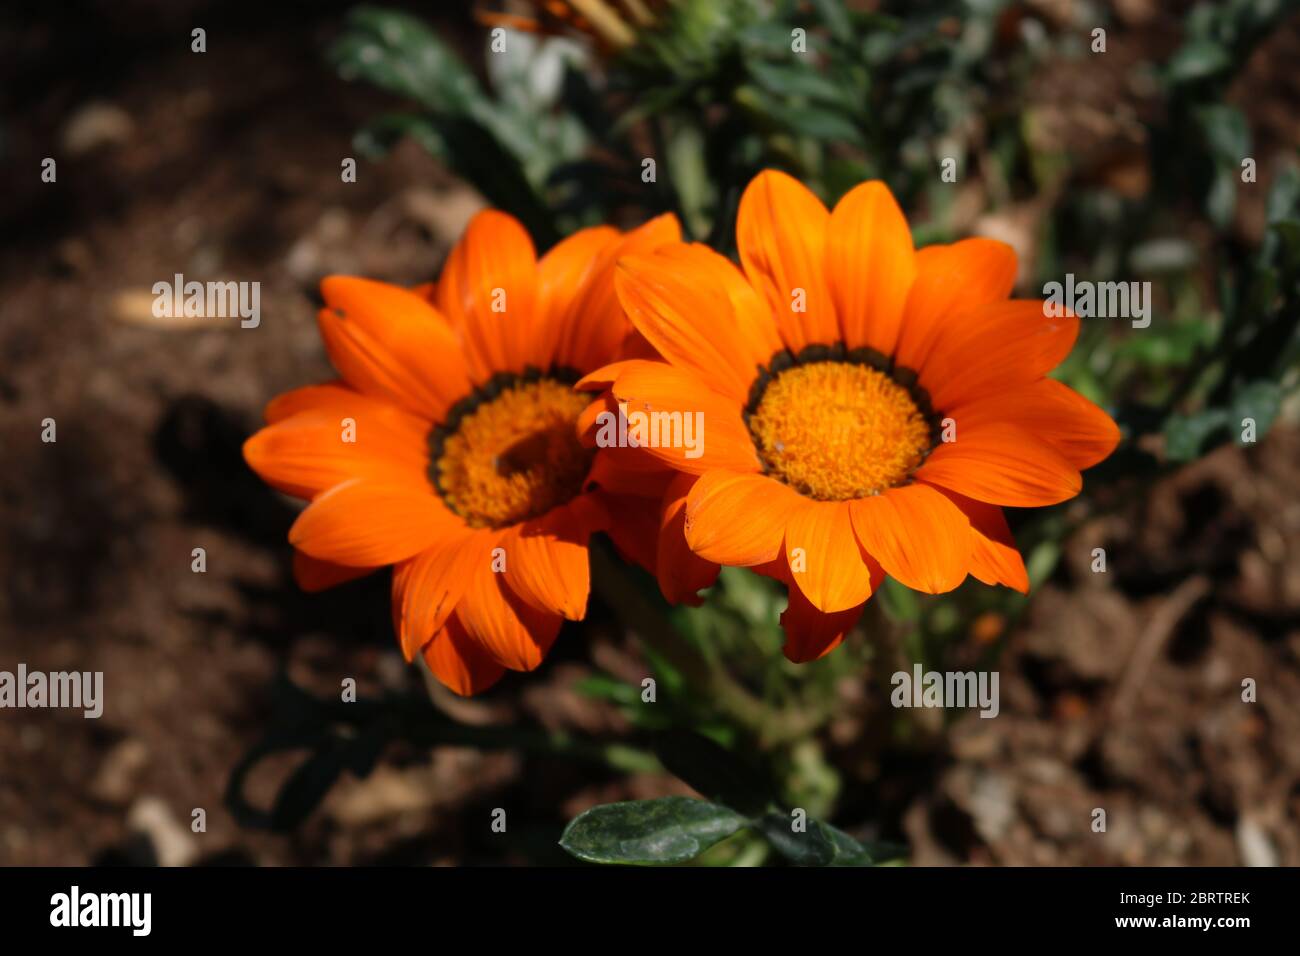 Two Orange Flowers in Bloom Stock Photo